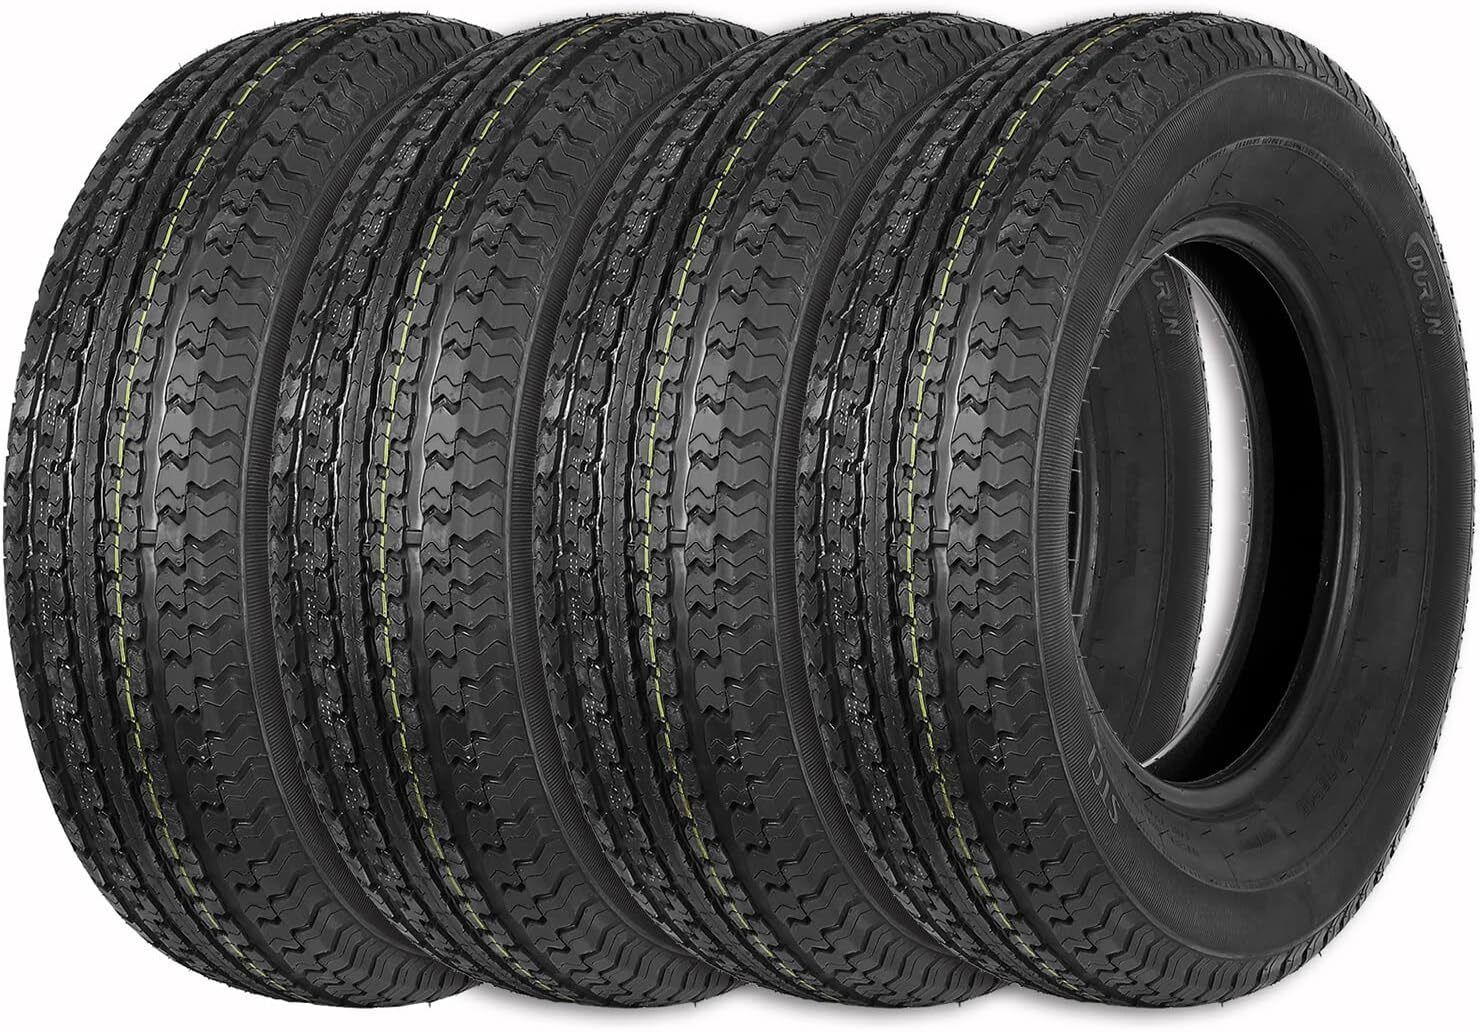 ST205/75R15 Radial Trailer Tire, 205 75 15, 8-Ply Load Range D, Set of 4